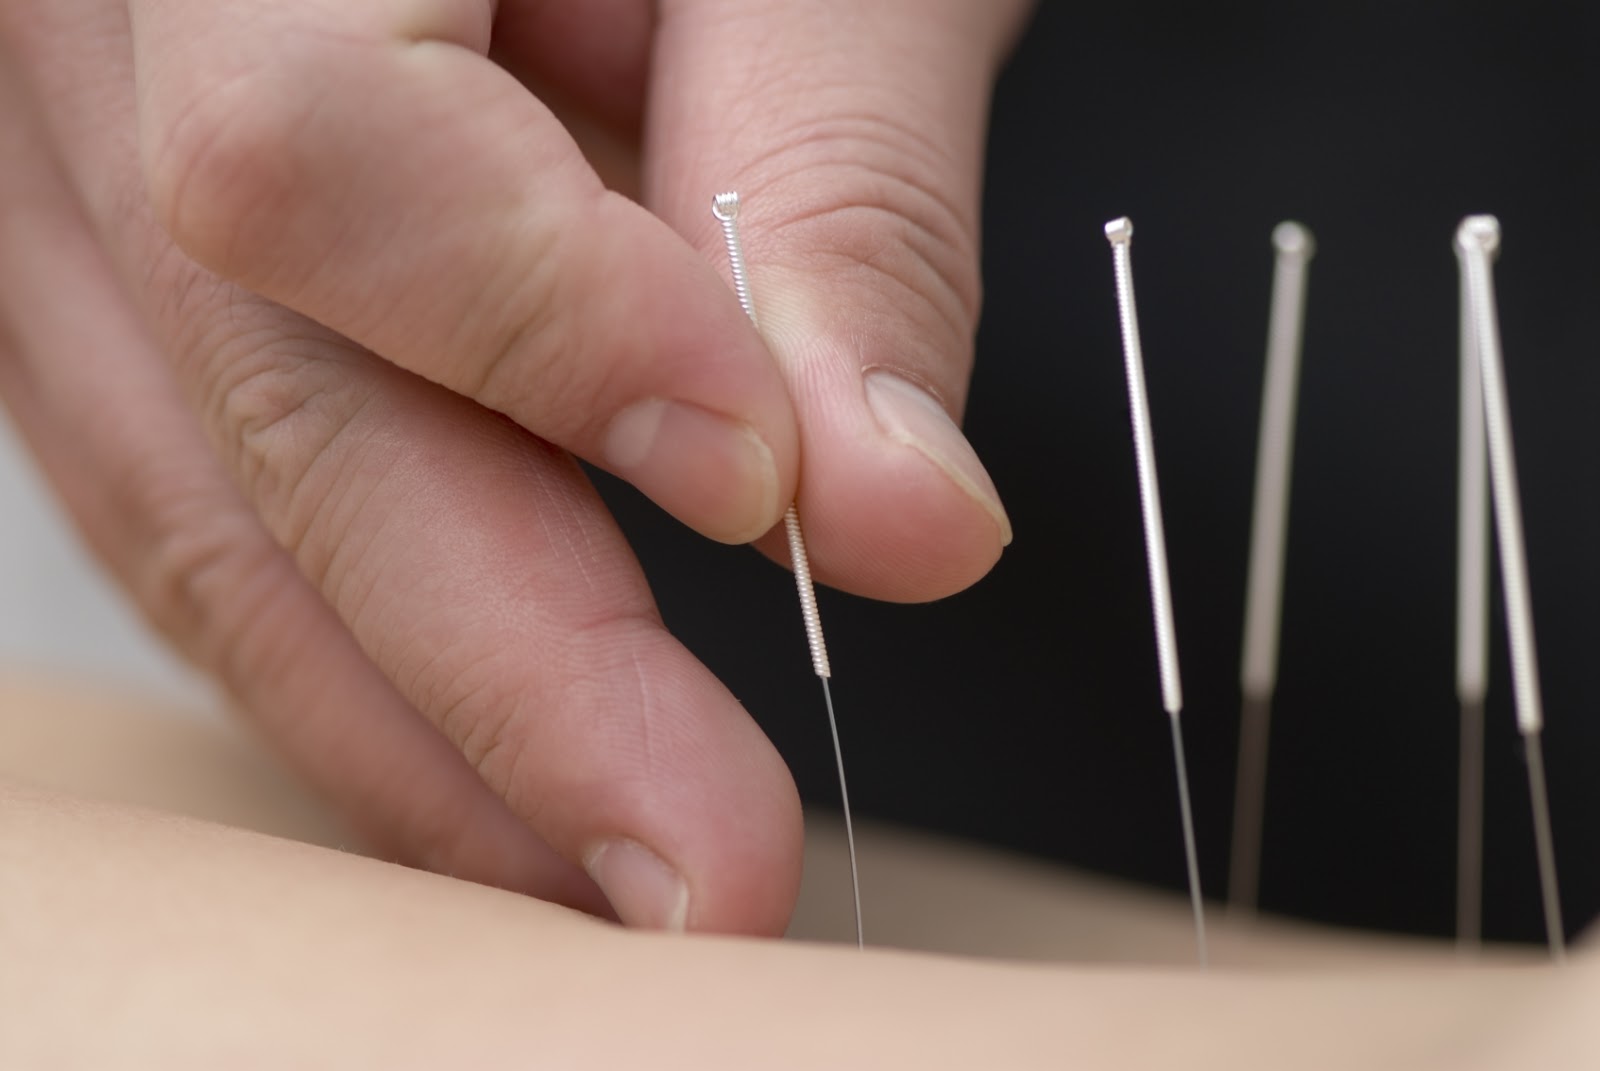 Acupuncture Needle Gauge Chart